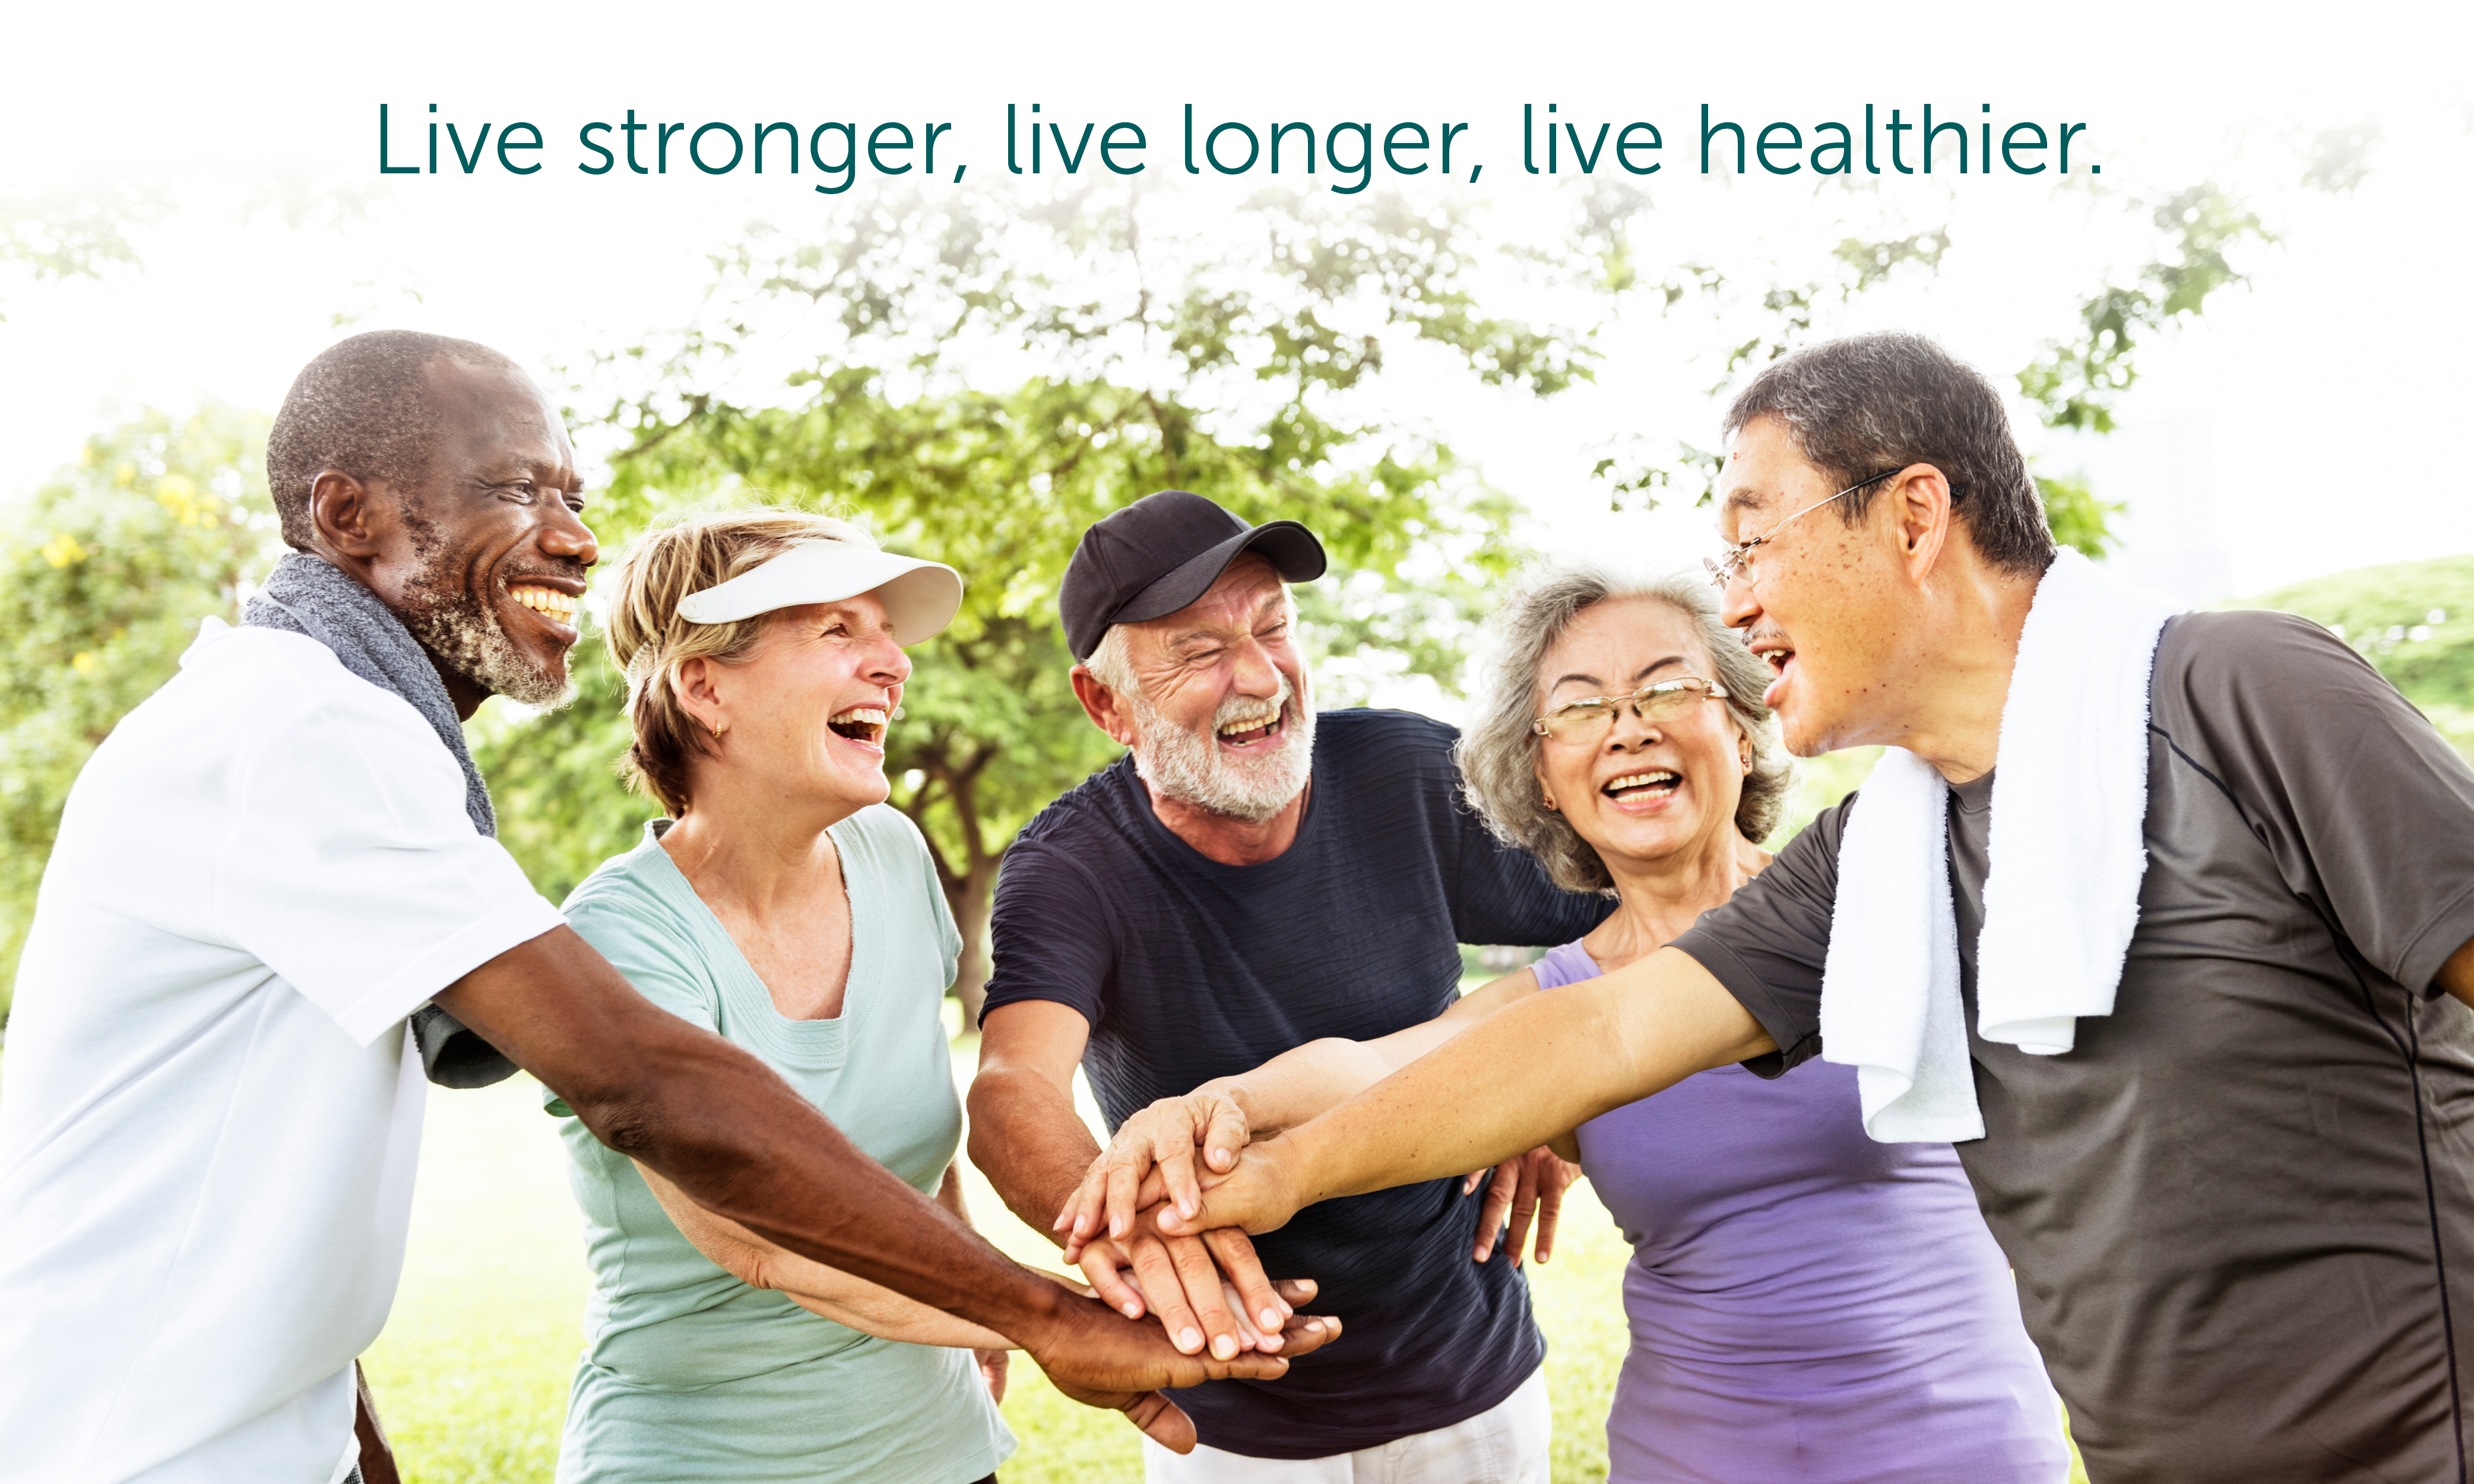 Live stronger, live longer, live healthier.